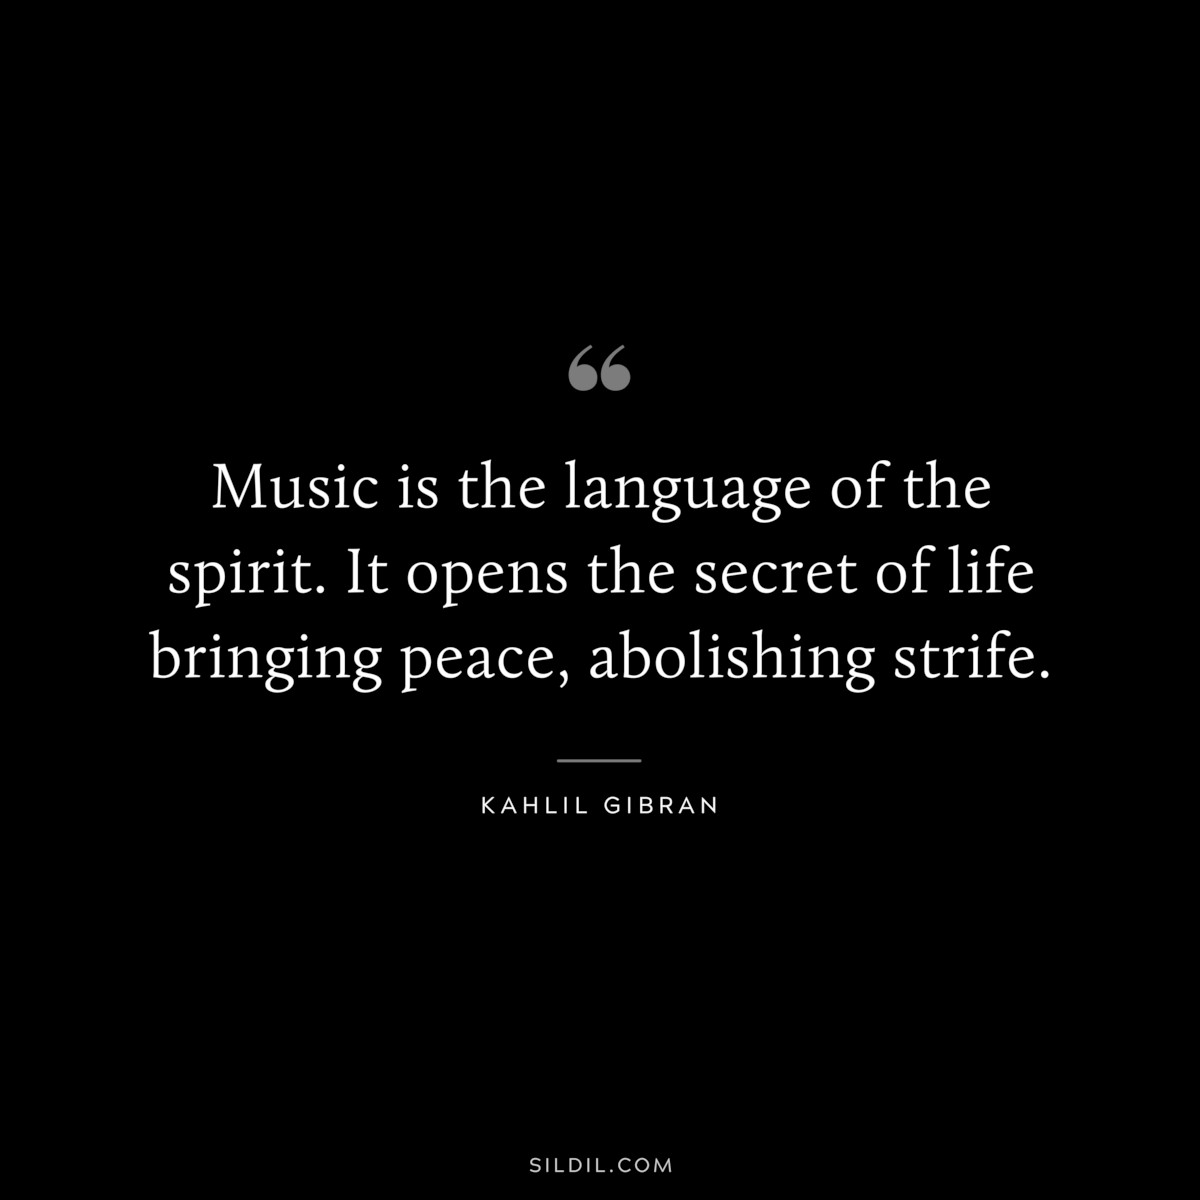 Music is the language of the spirit. It opens the secret of life bringing peace, abolishing strife. ― Kahlil Gibran